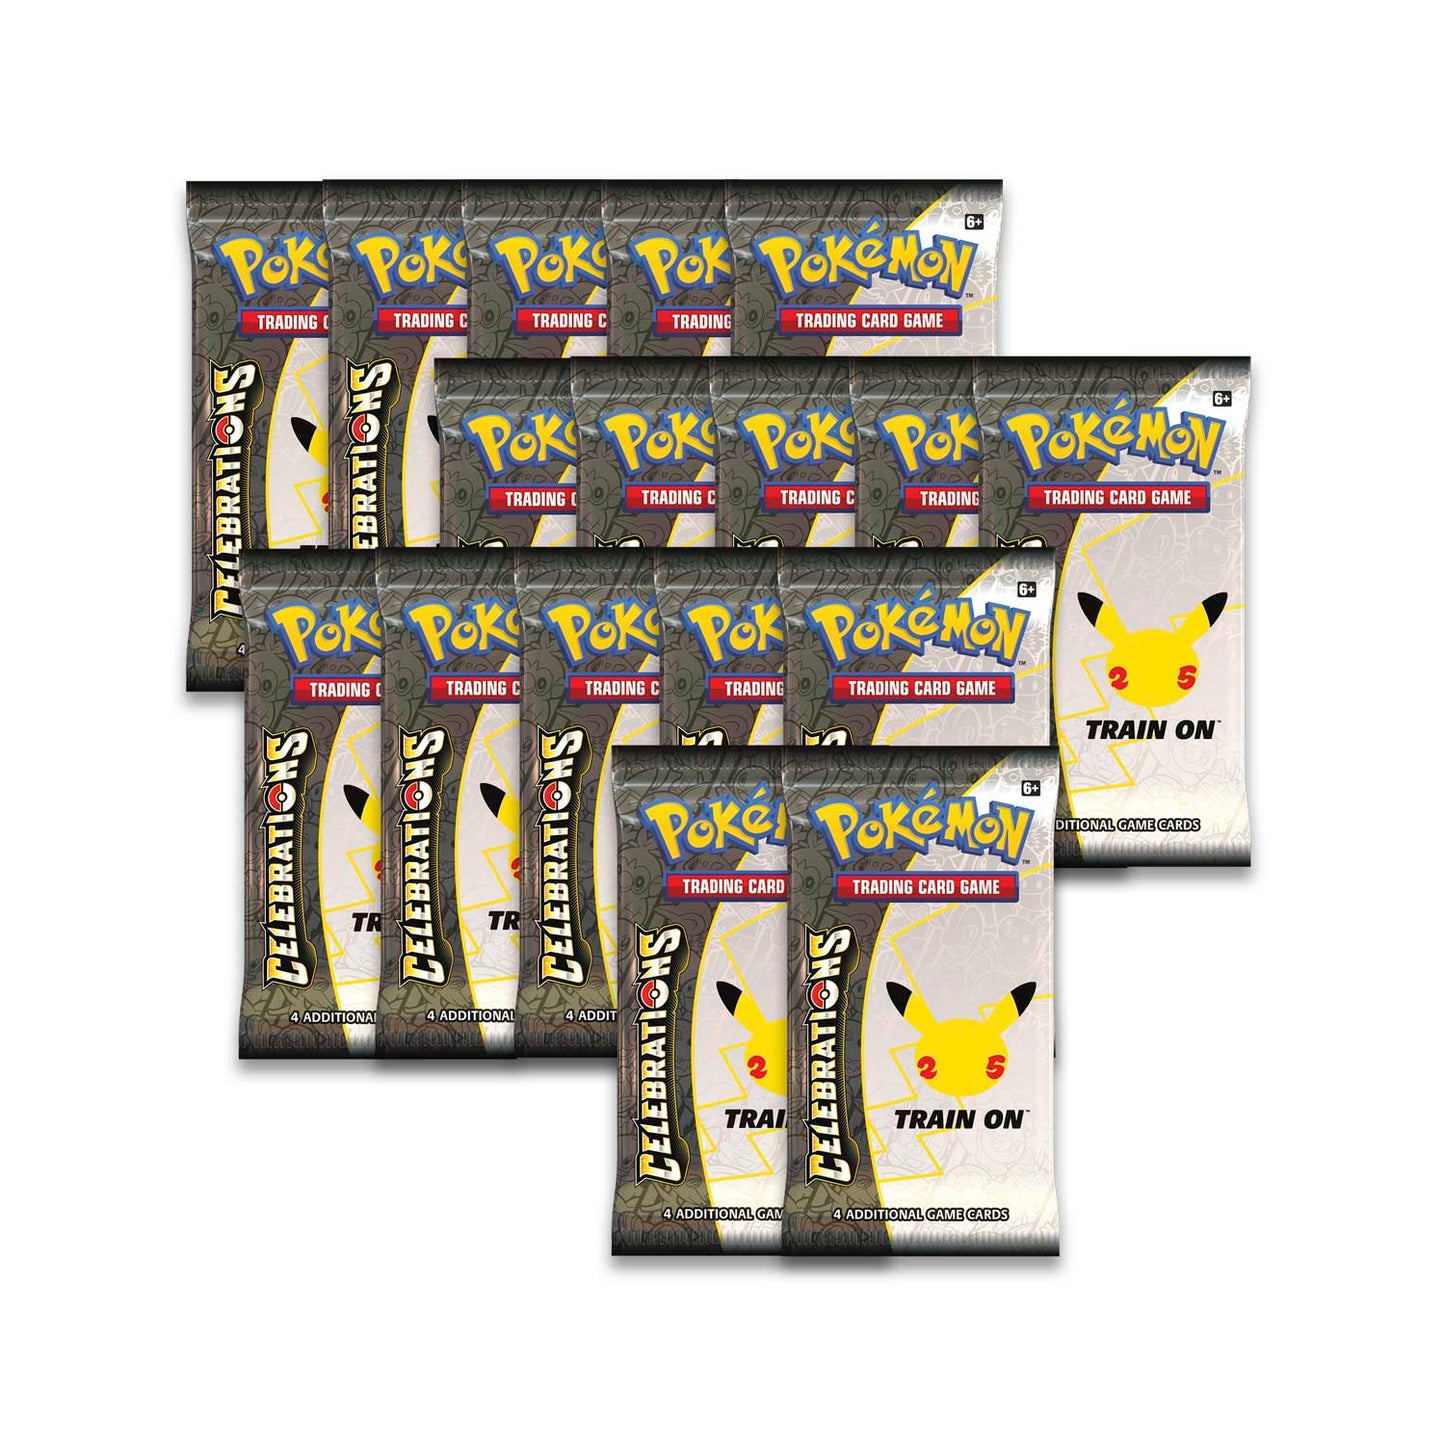 Pokemon Celebrations Ultra Premium Collection Box